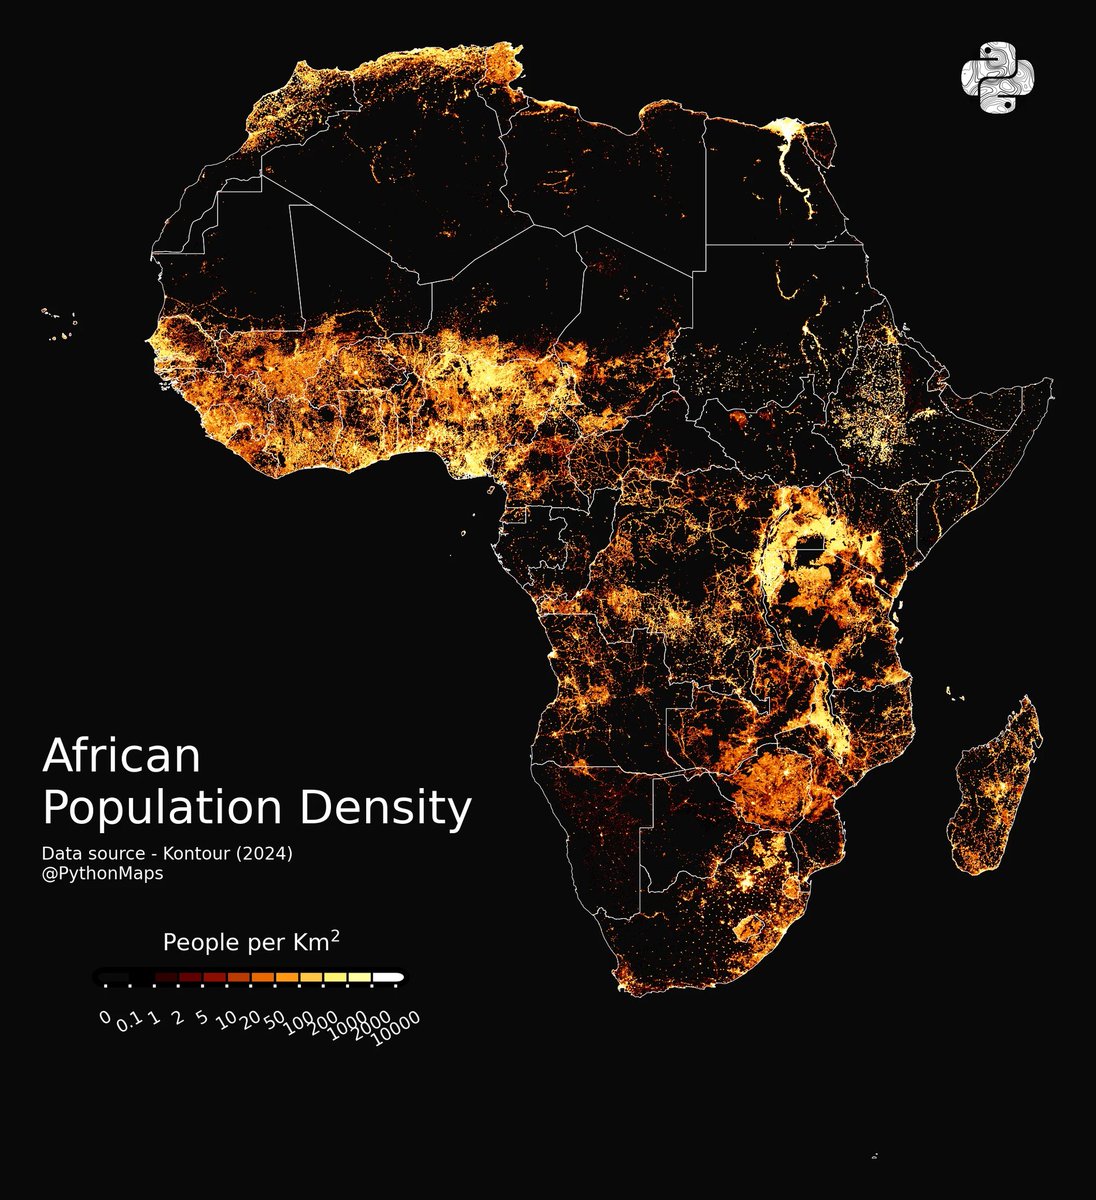 Population Density of Africa!